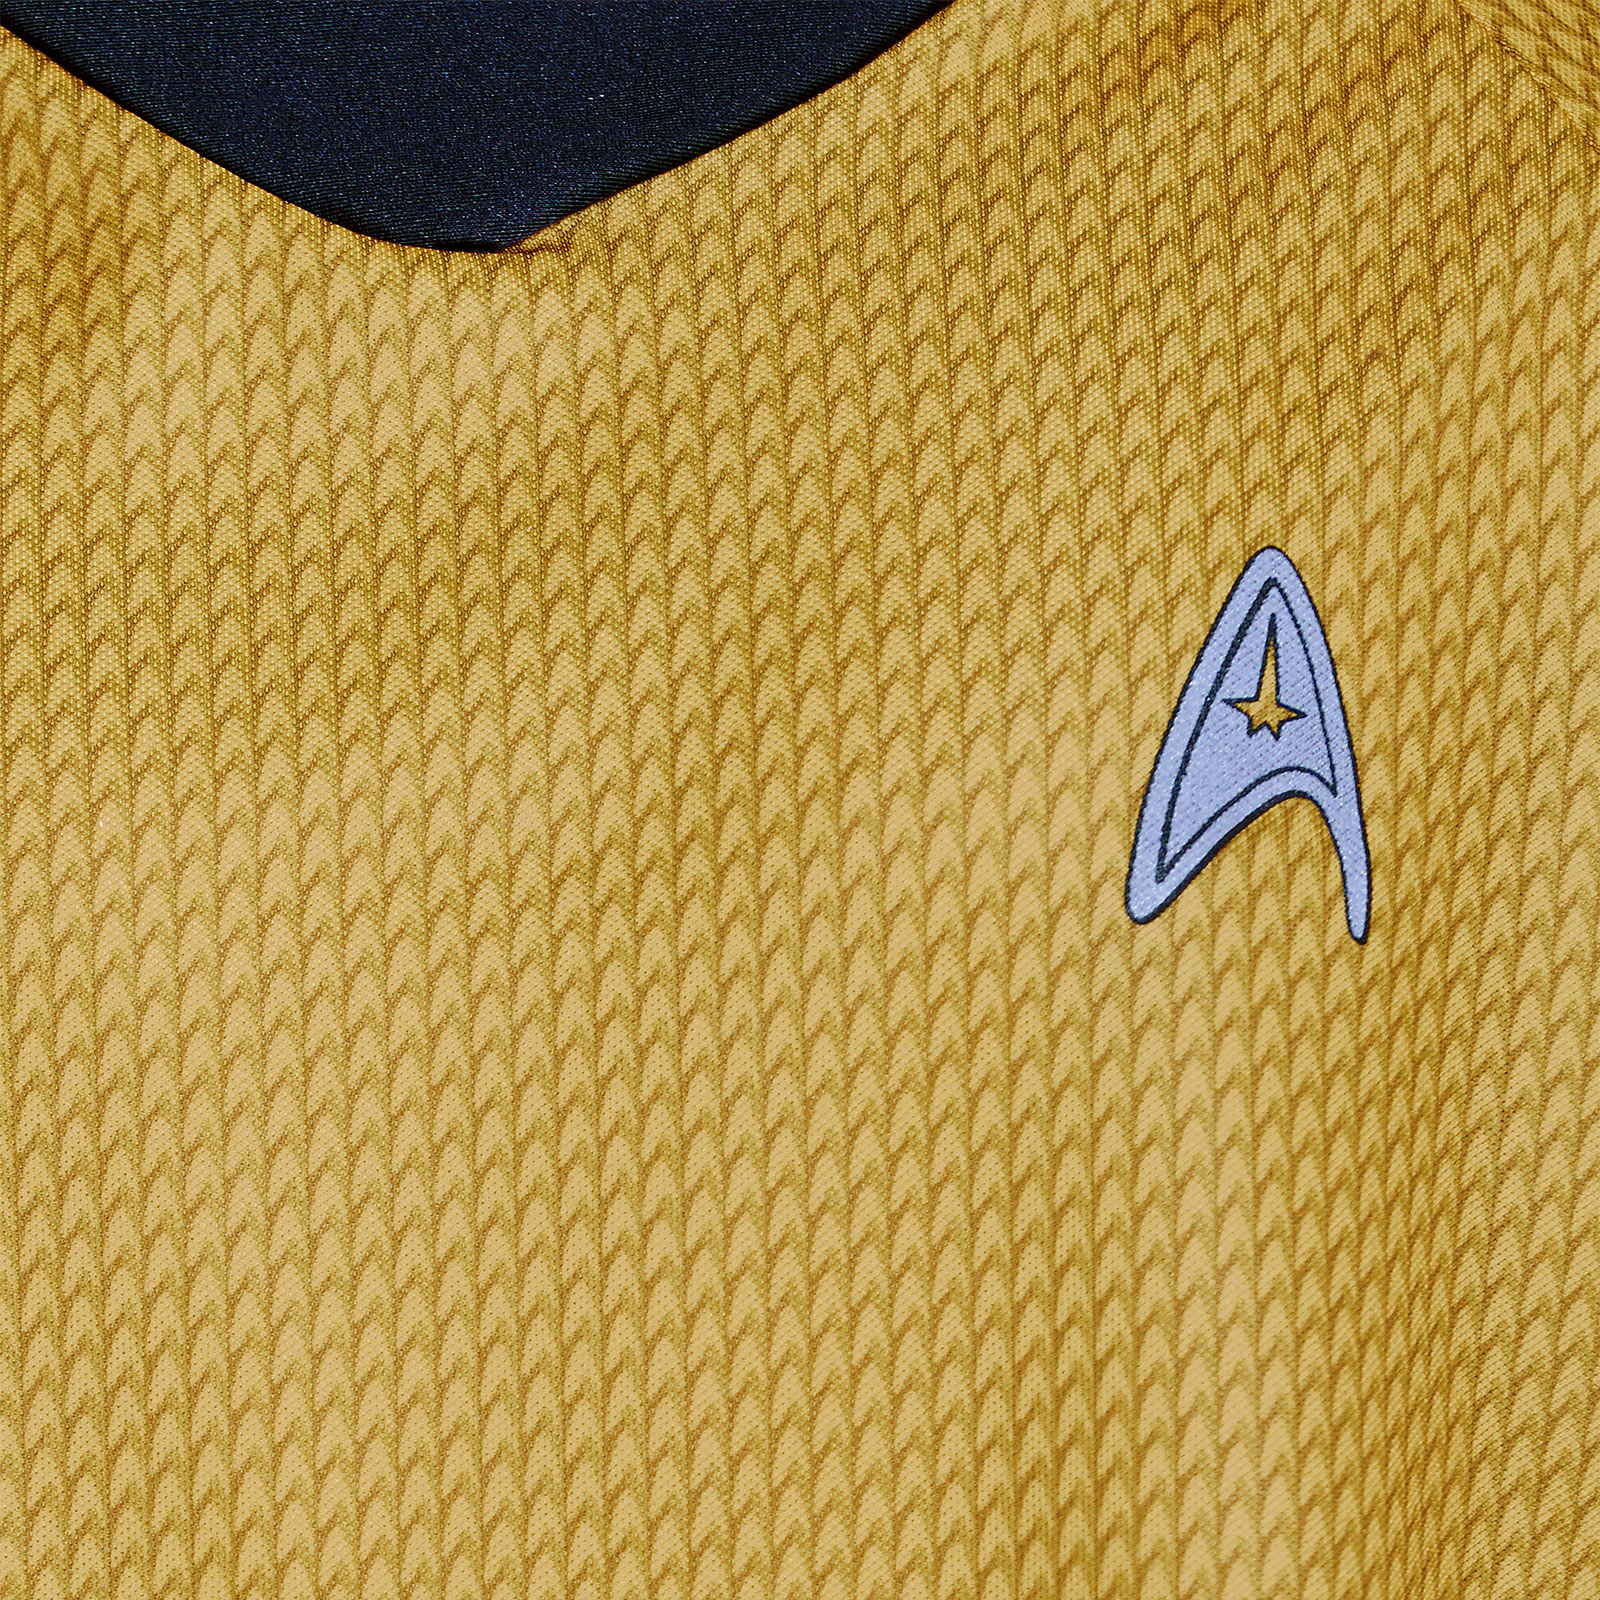 Star Trek - Chemise de costume de film du Capitaine Kirk